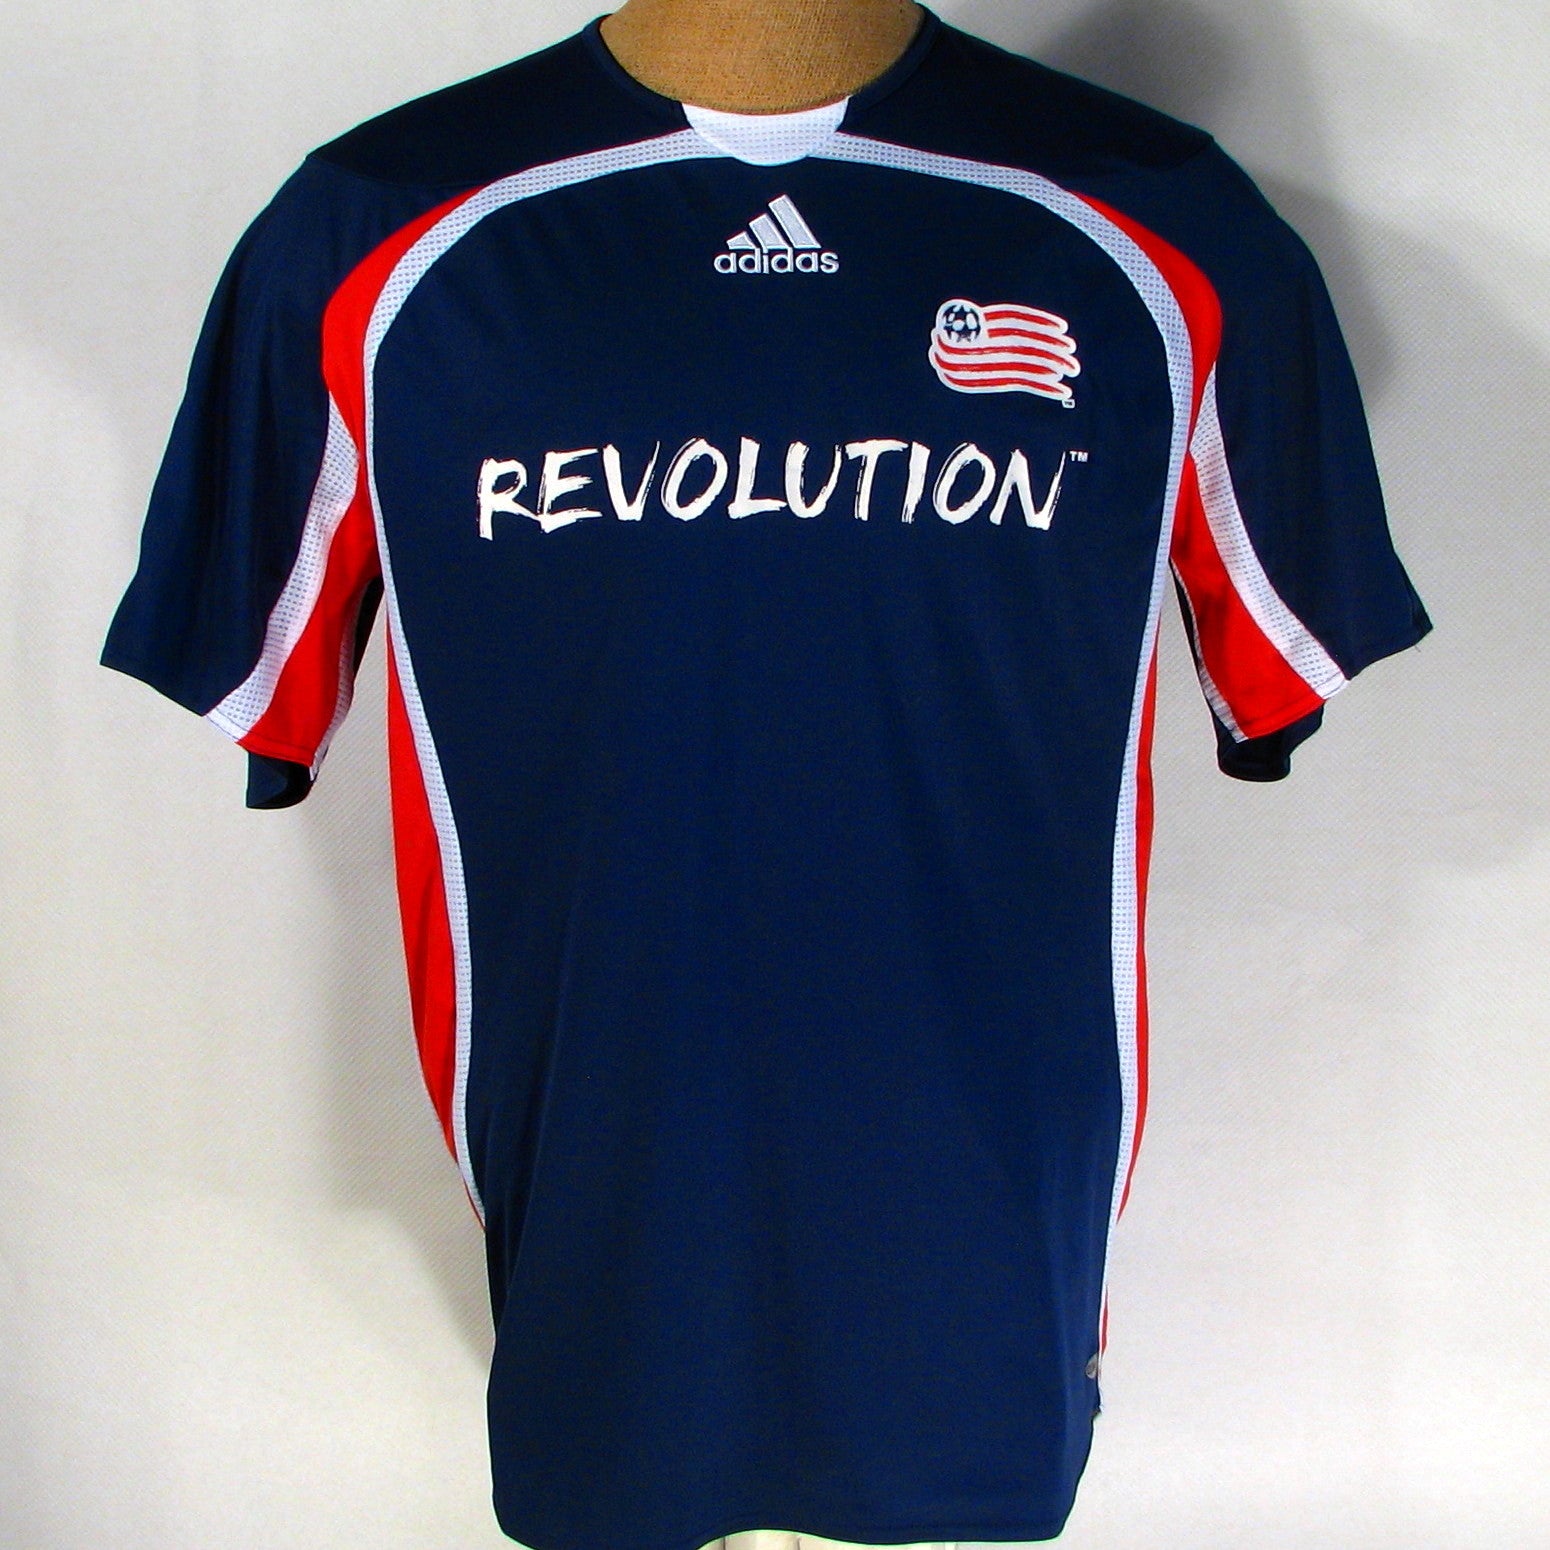 revolution jersey